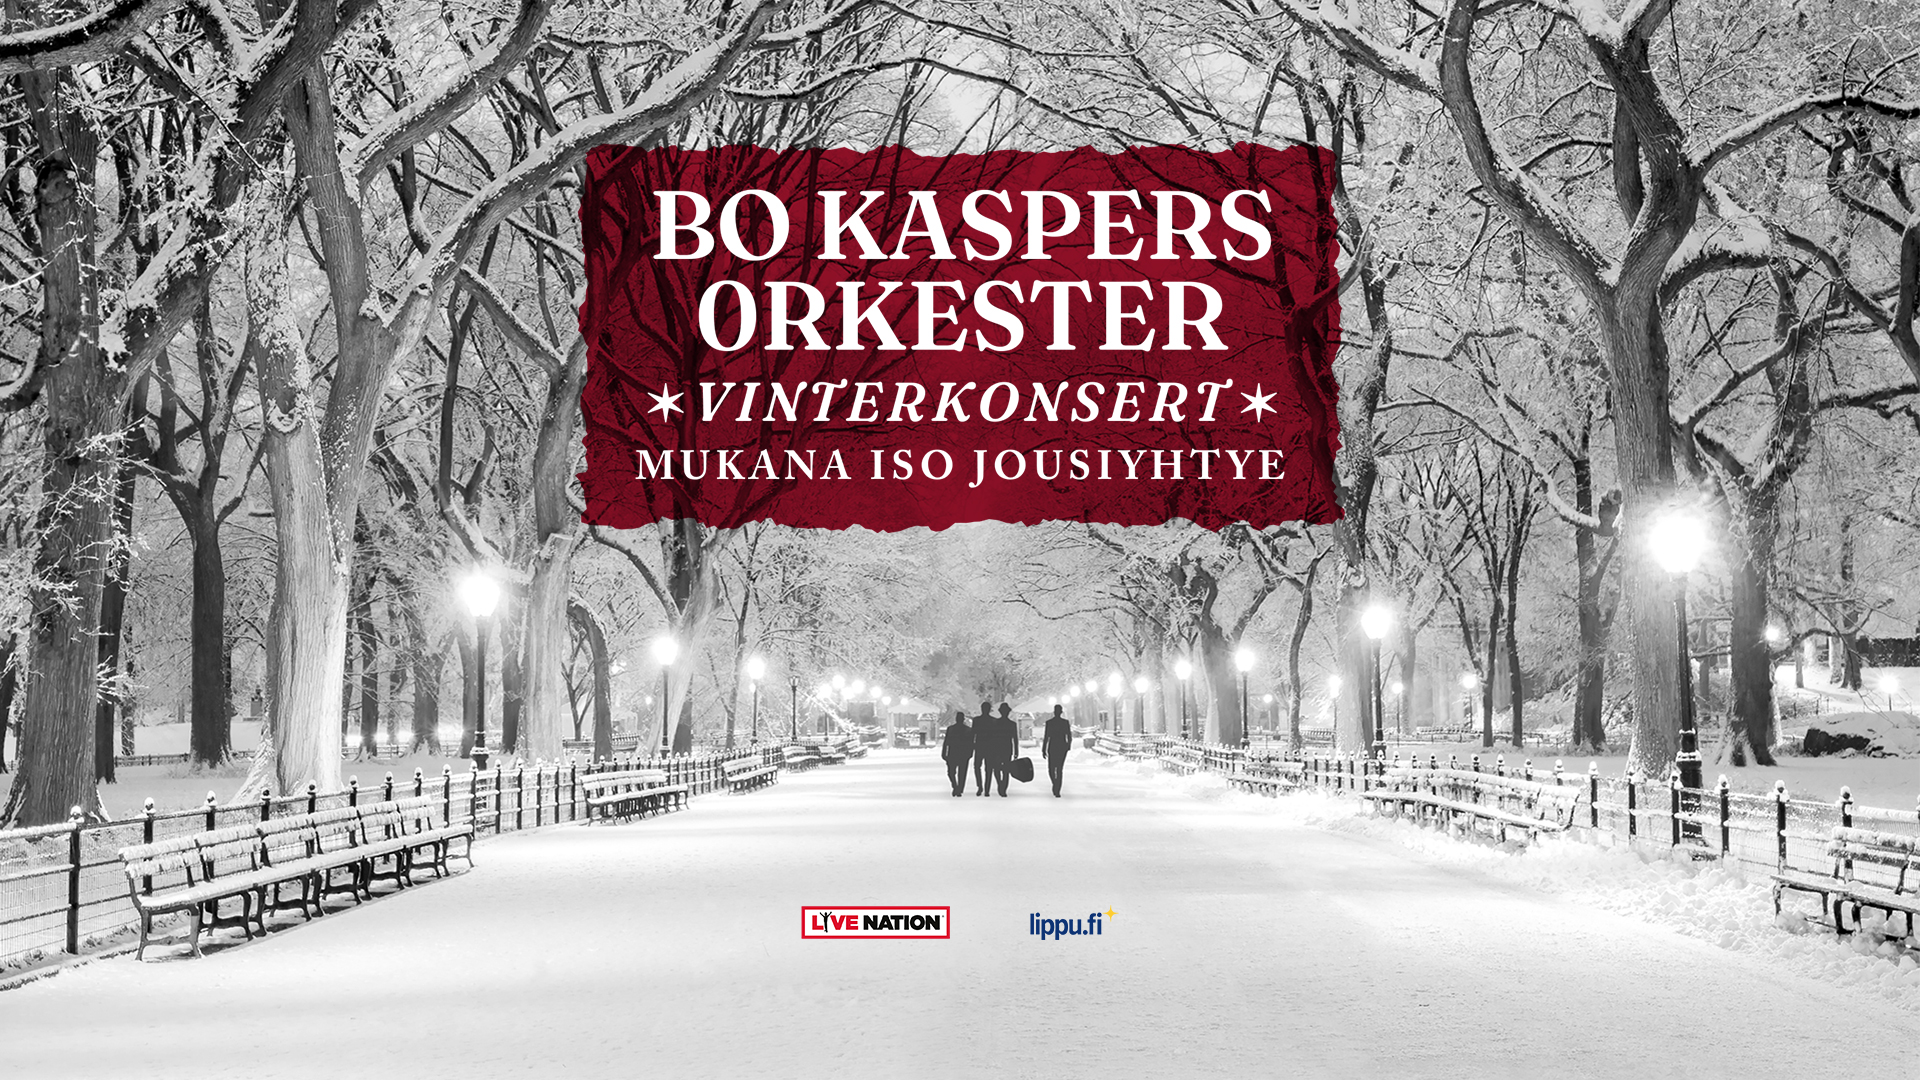 BoKaspersOrkester-Facebook-1920x1080-FI